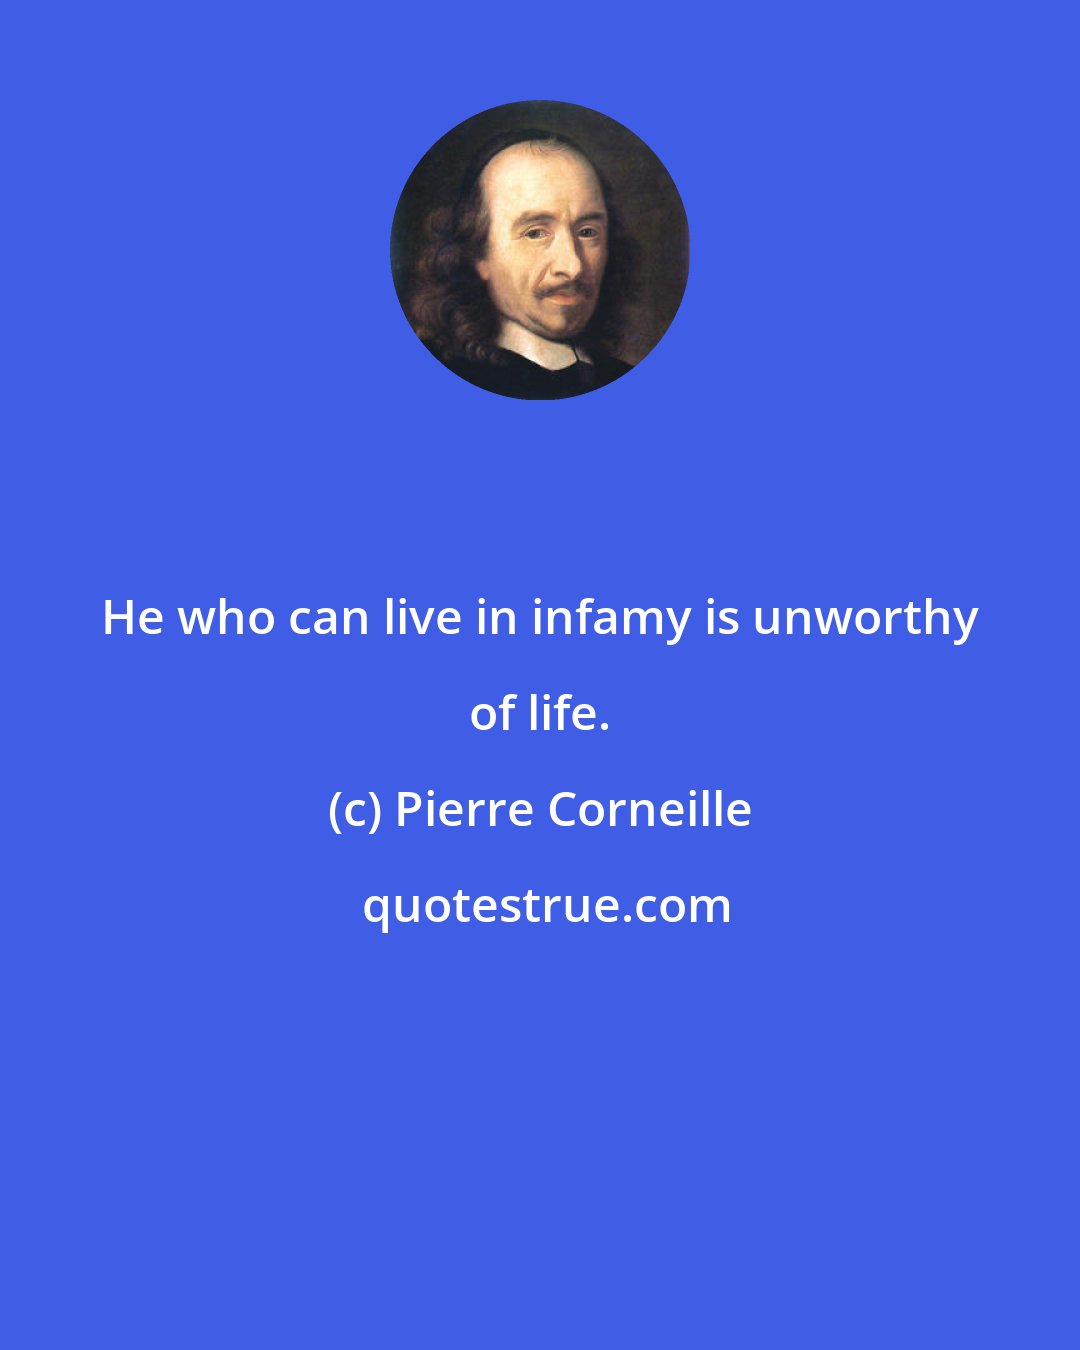 Pierre Corneille: He who can live in infamy is unworthy of life.